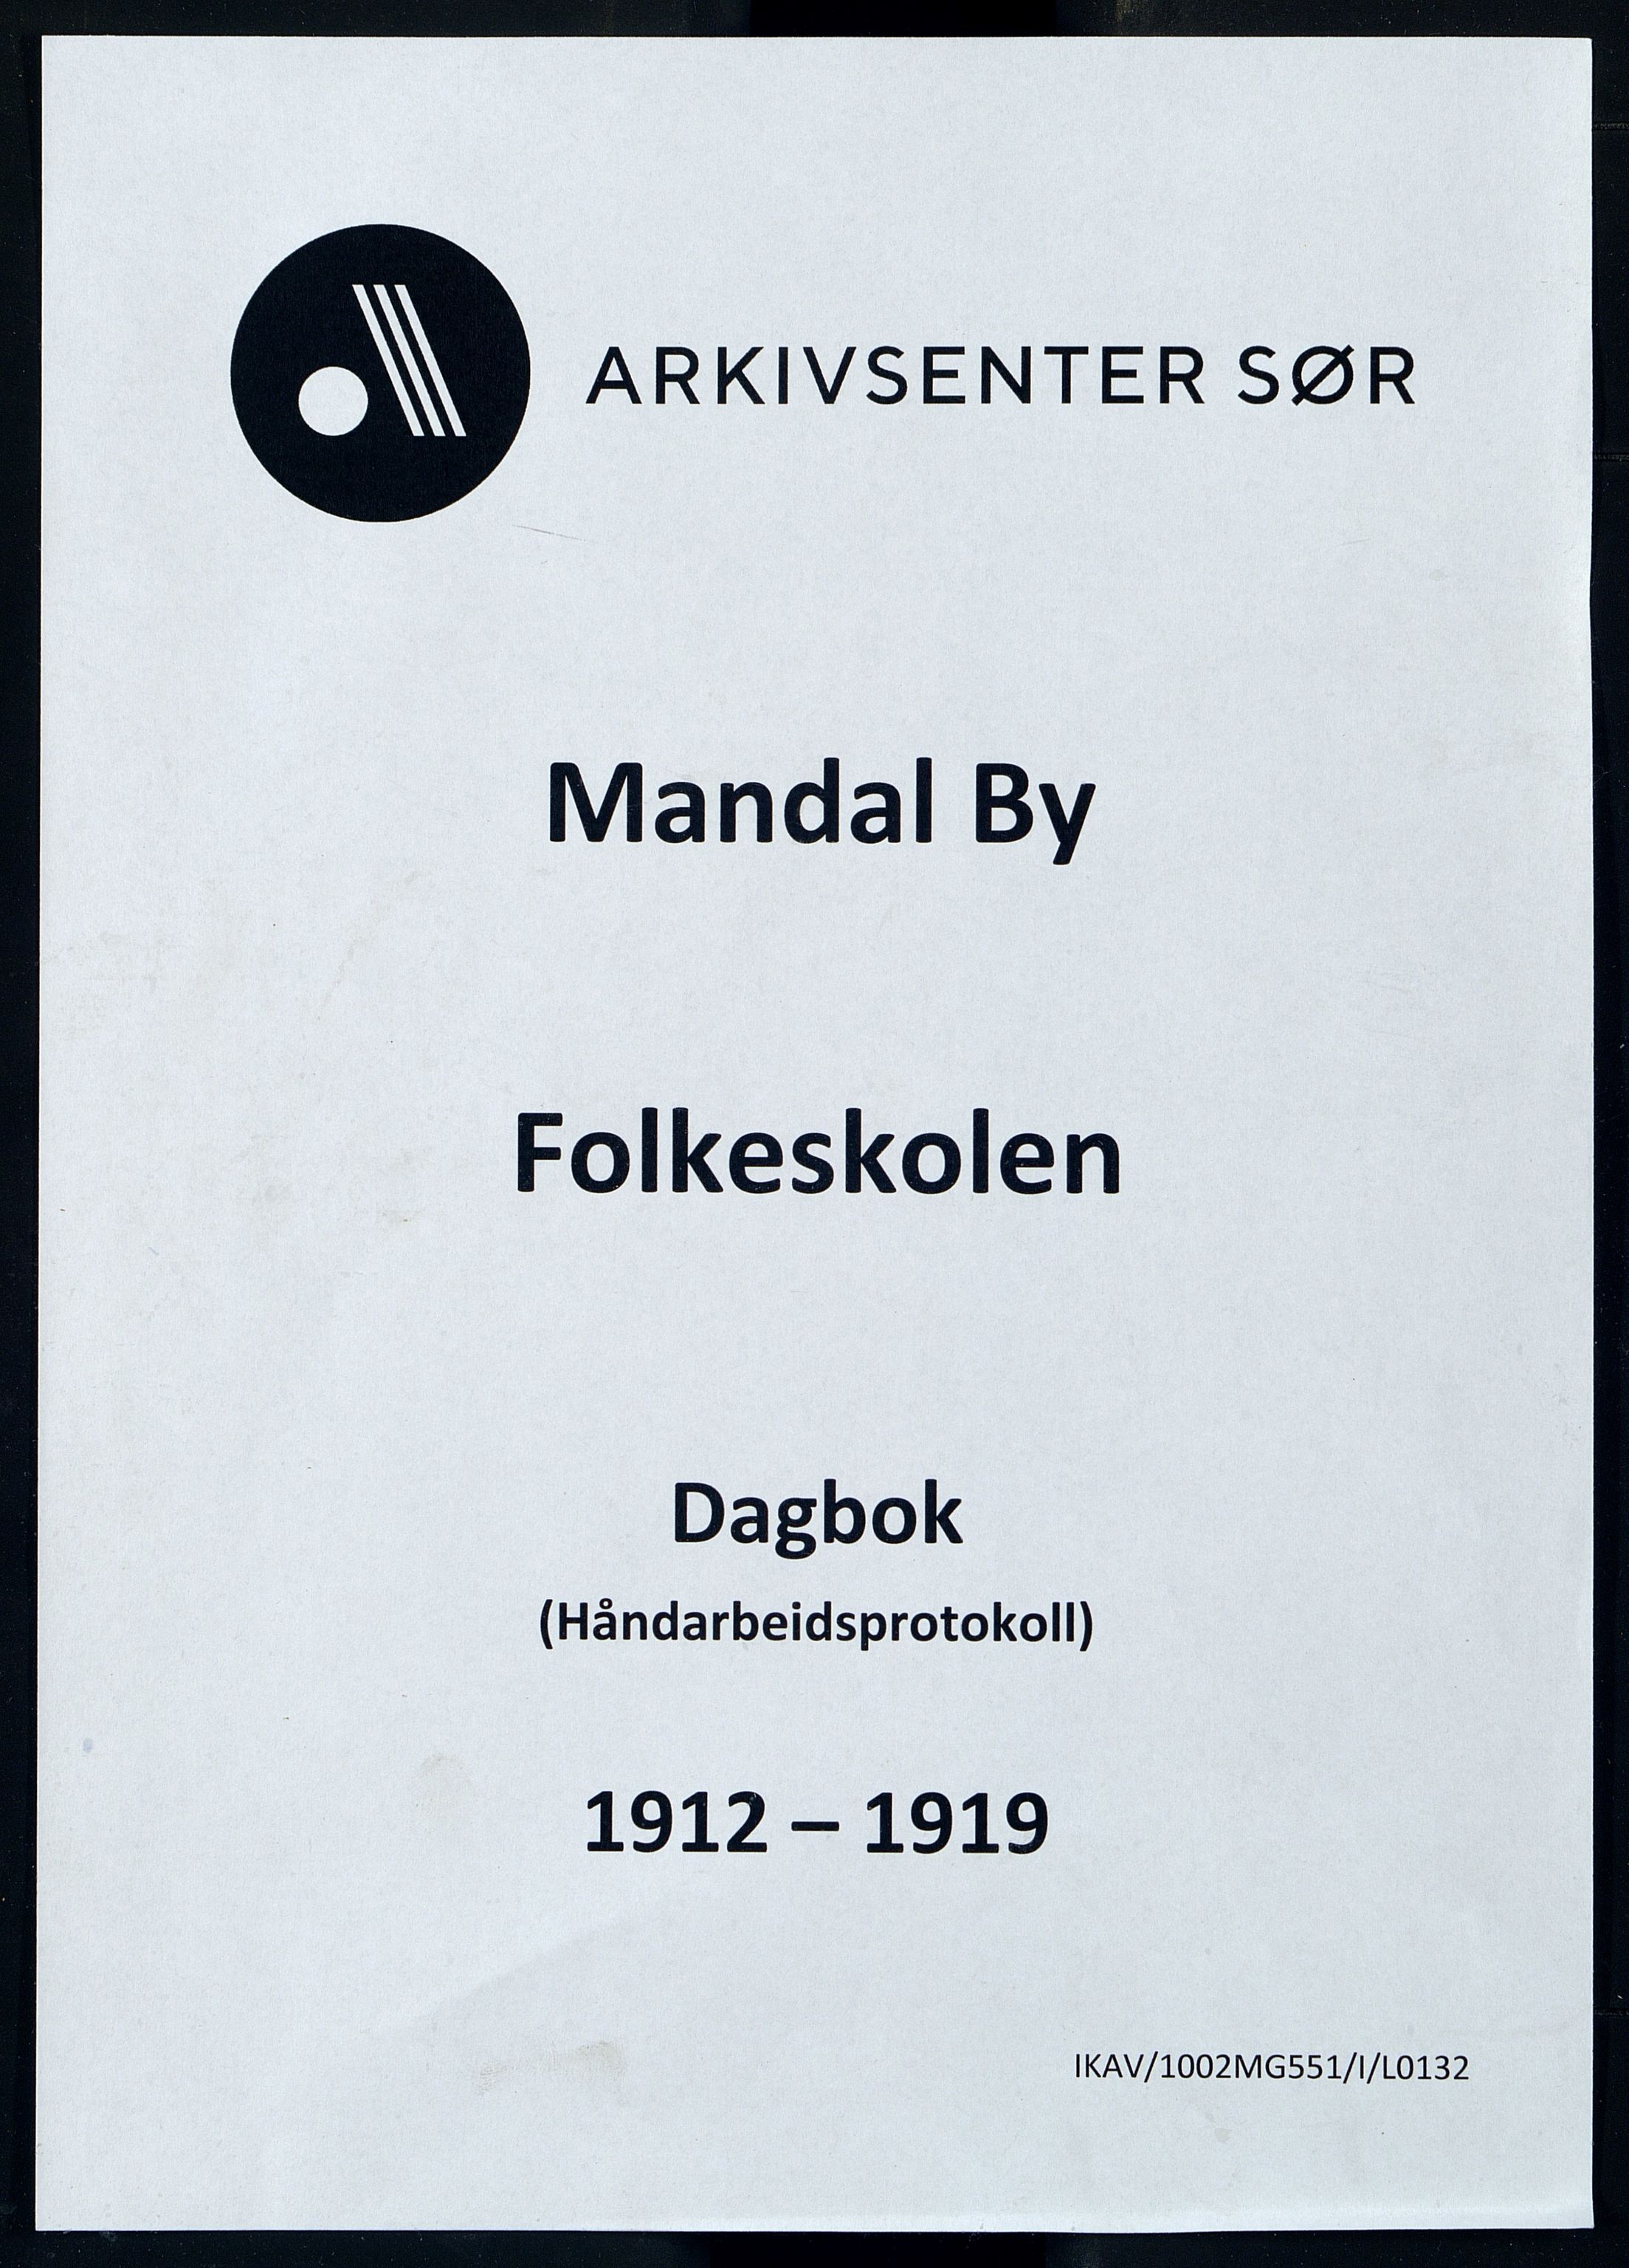 Mandal By - Mandal Allmueskole/Folkeskole/Skole, IKAV/1002MG551/I/L0132: Dagbok - håndarbeidsprotokoll, 1912-1919